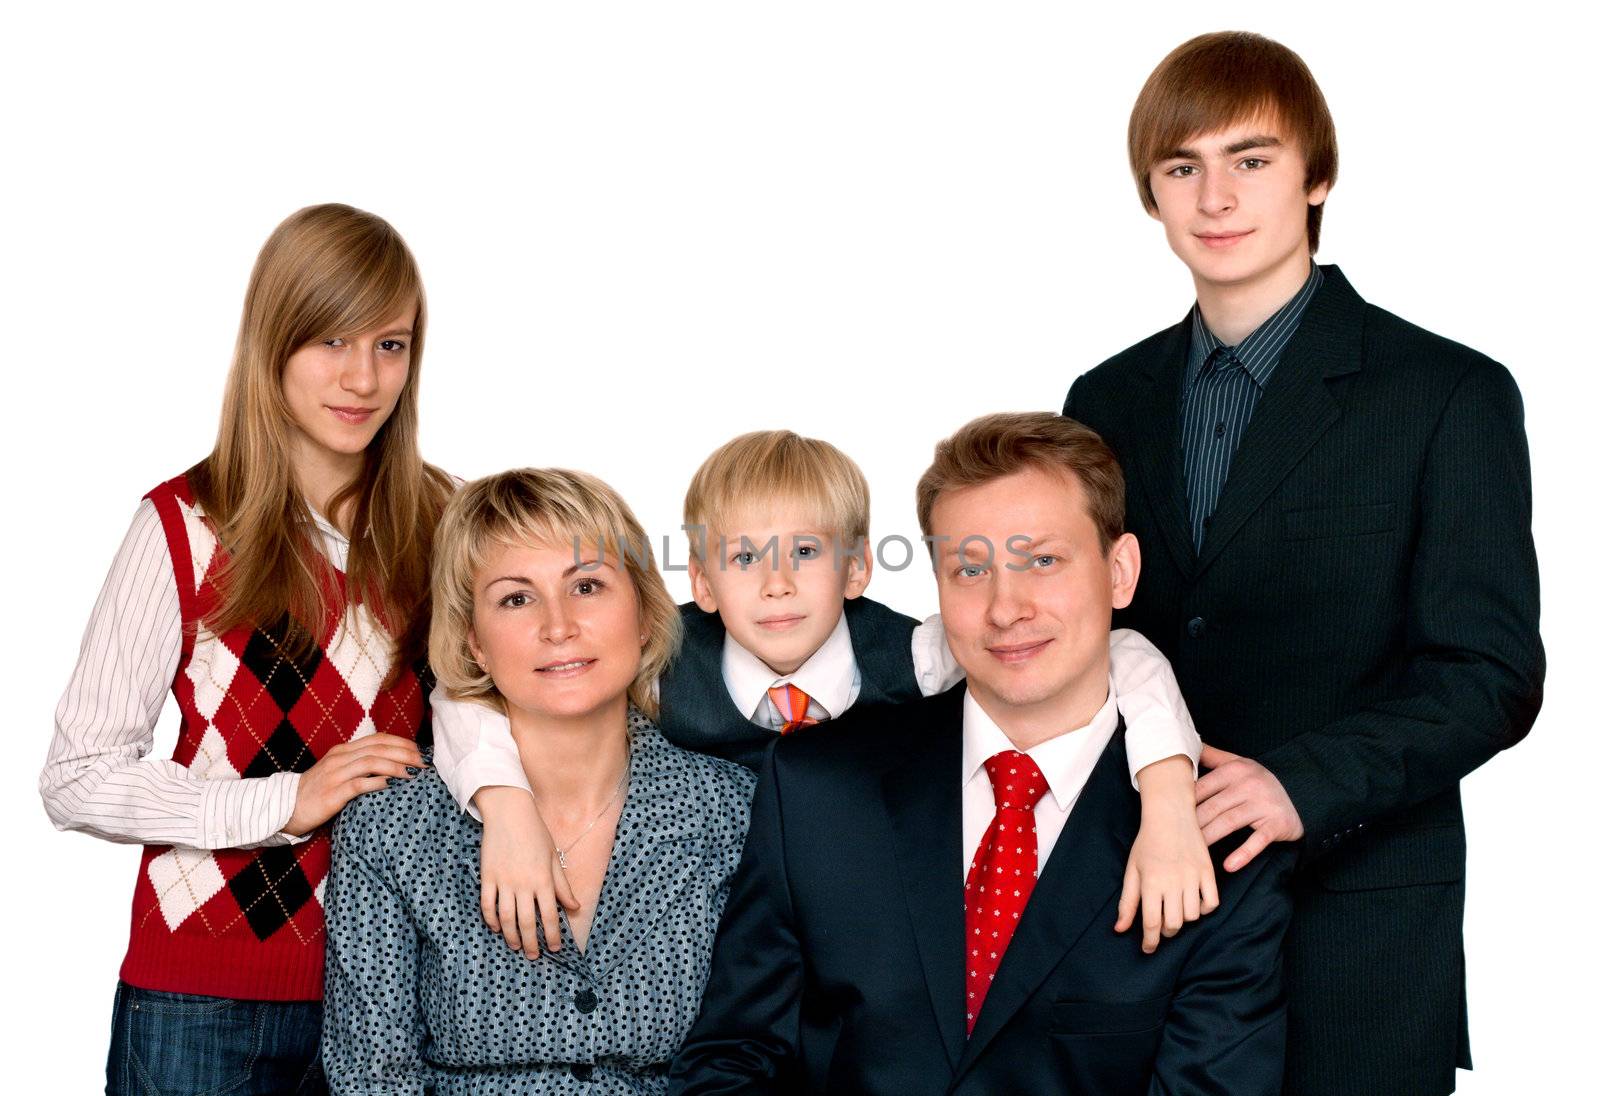 Family portrait by RuslanOmega